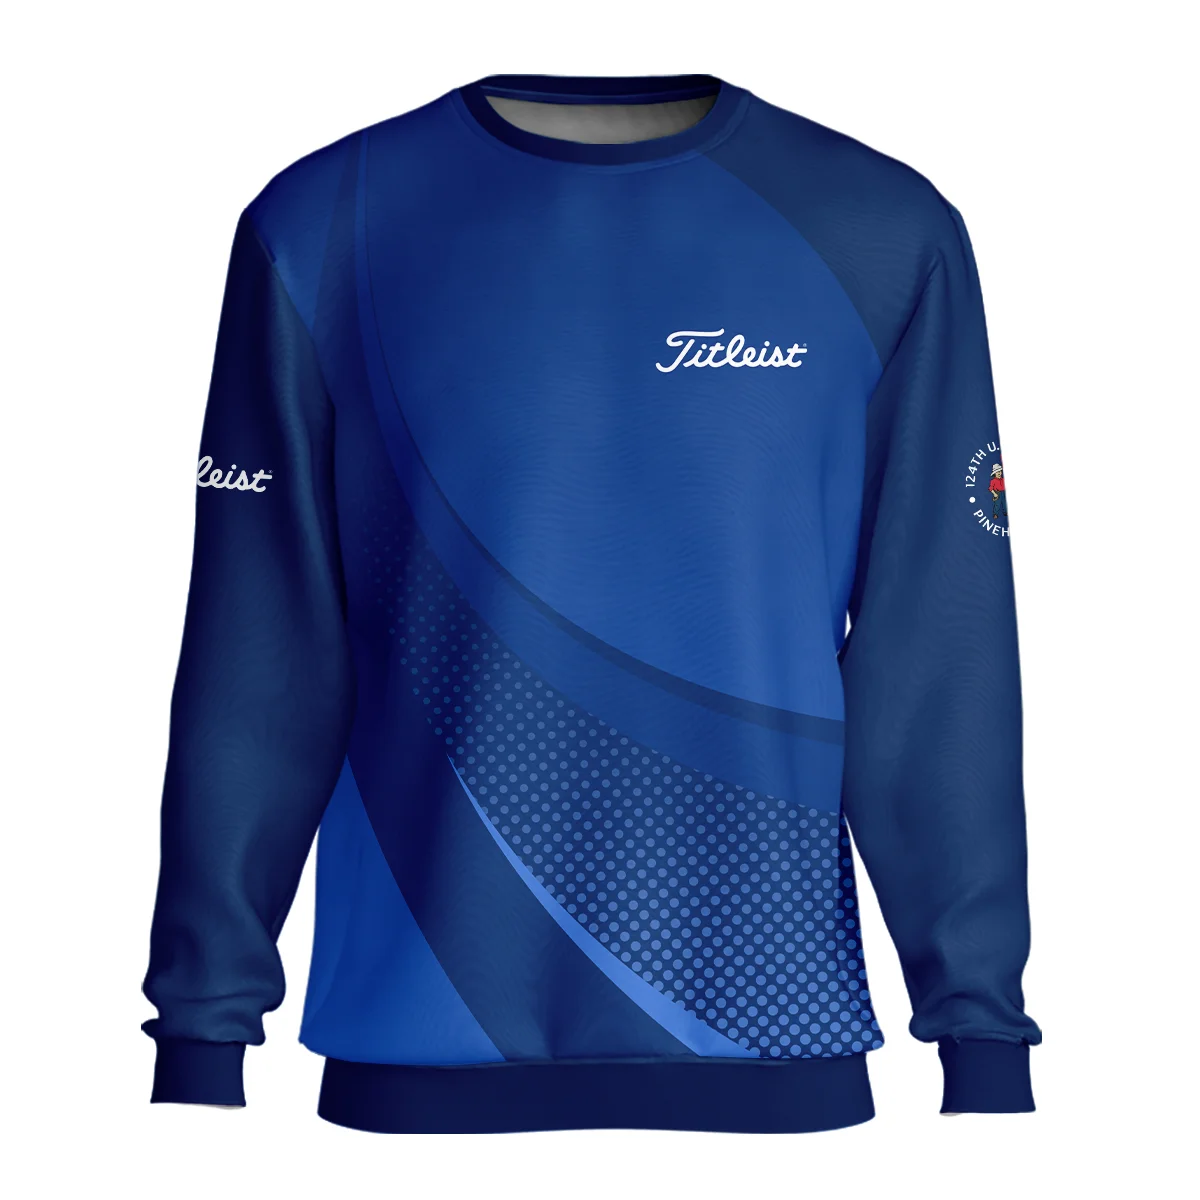 Titleist 124th U.S. Open Pinehurst Golf Sport Sleeveless Jacket Dark Blue Gradient Halftone Pattern All Over Print Sleeveless Jacket